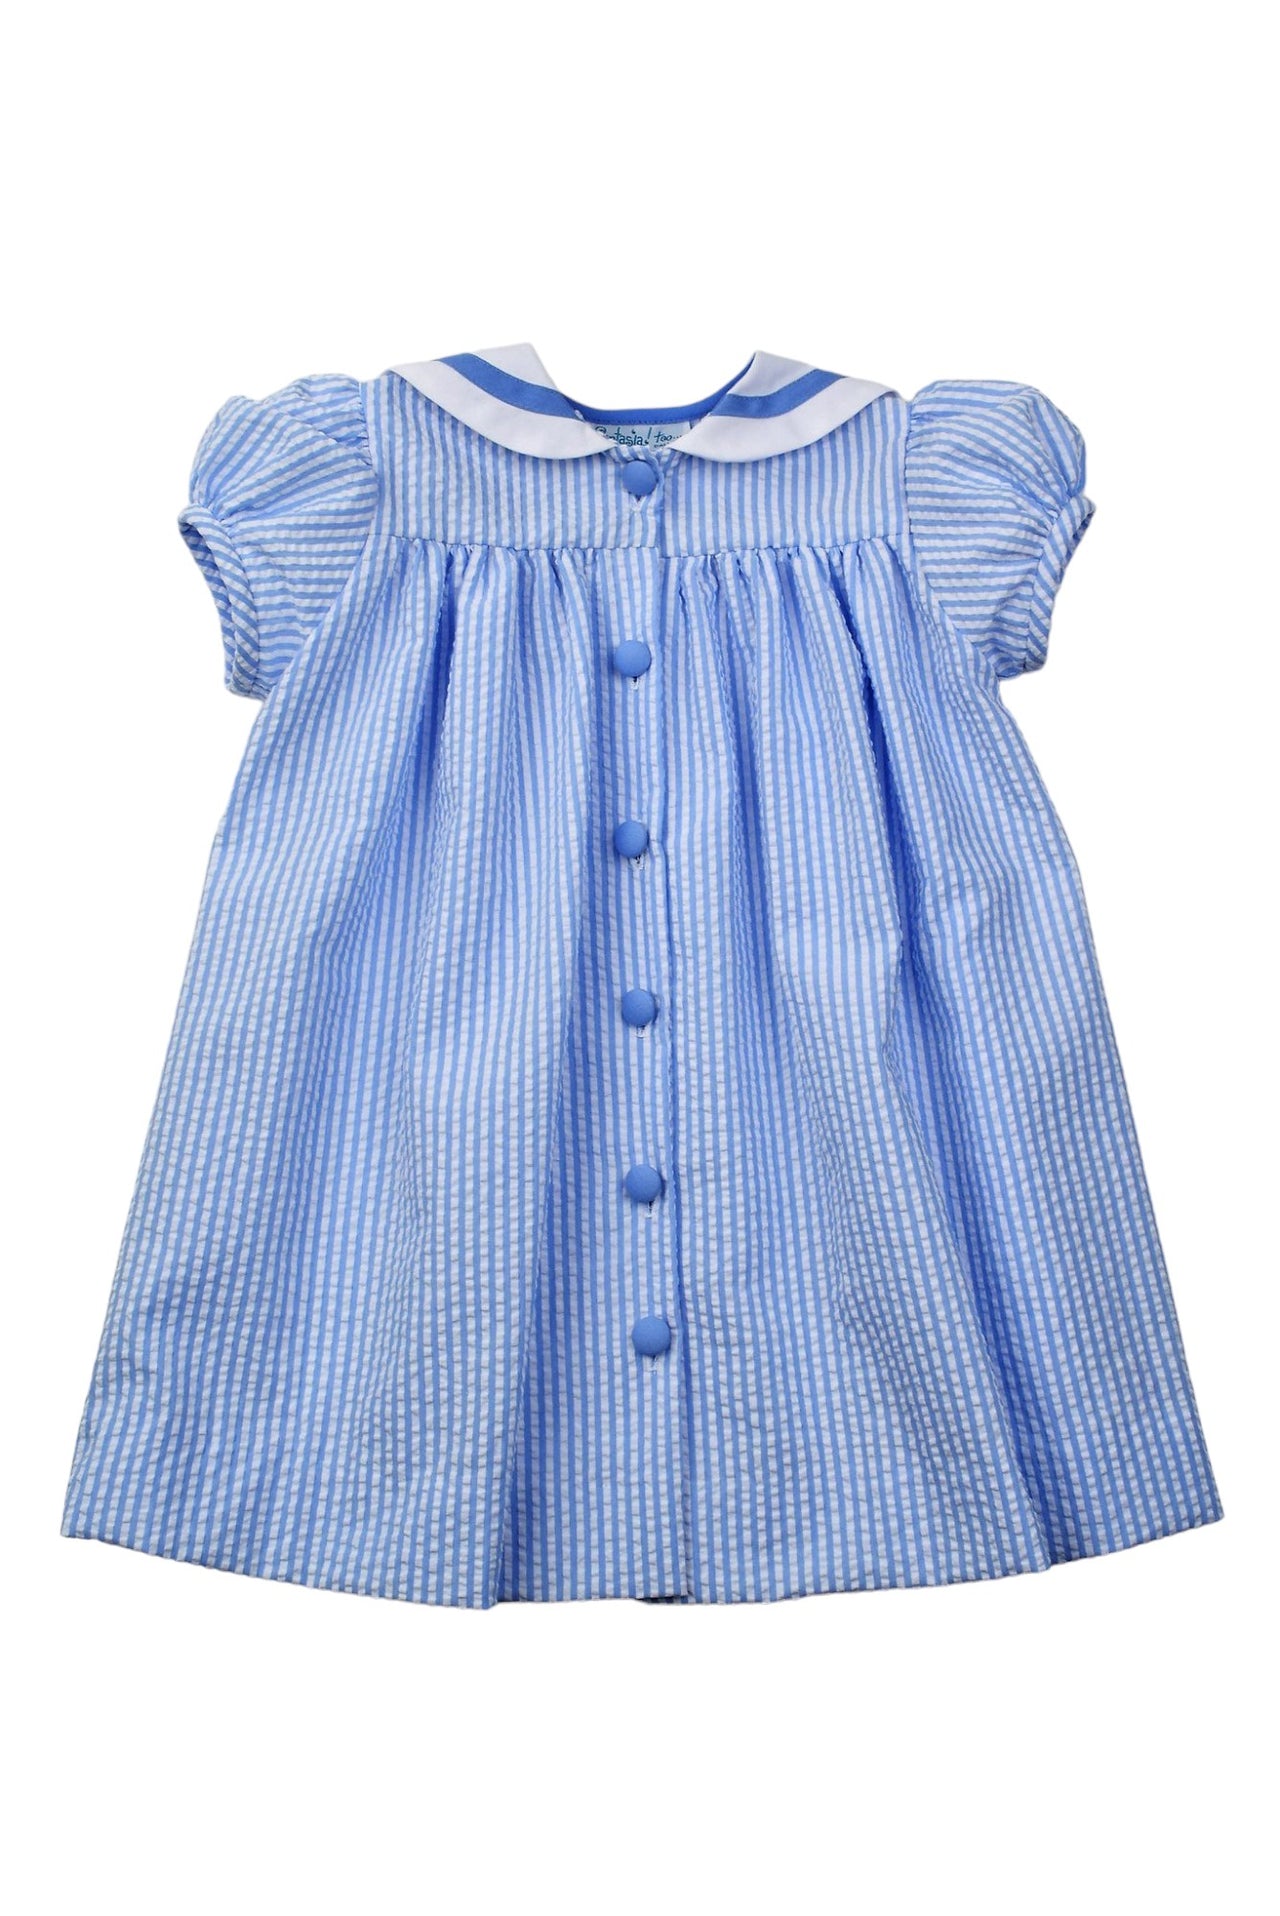 Funtasia Too Sailor Dress Stripe Blue 69560-Blue 5012